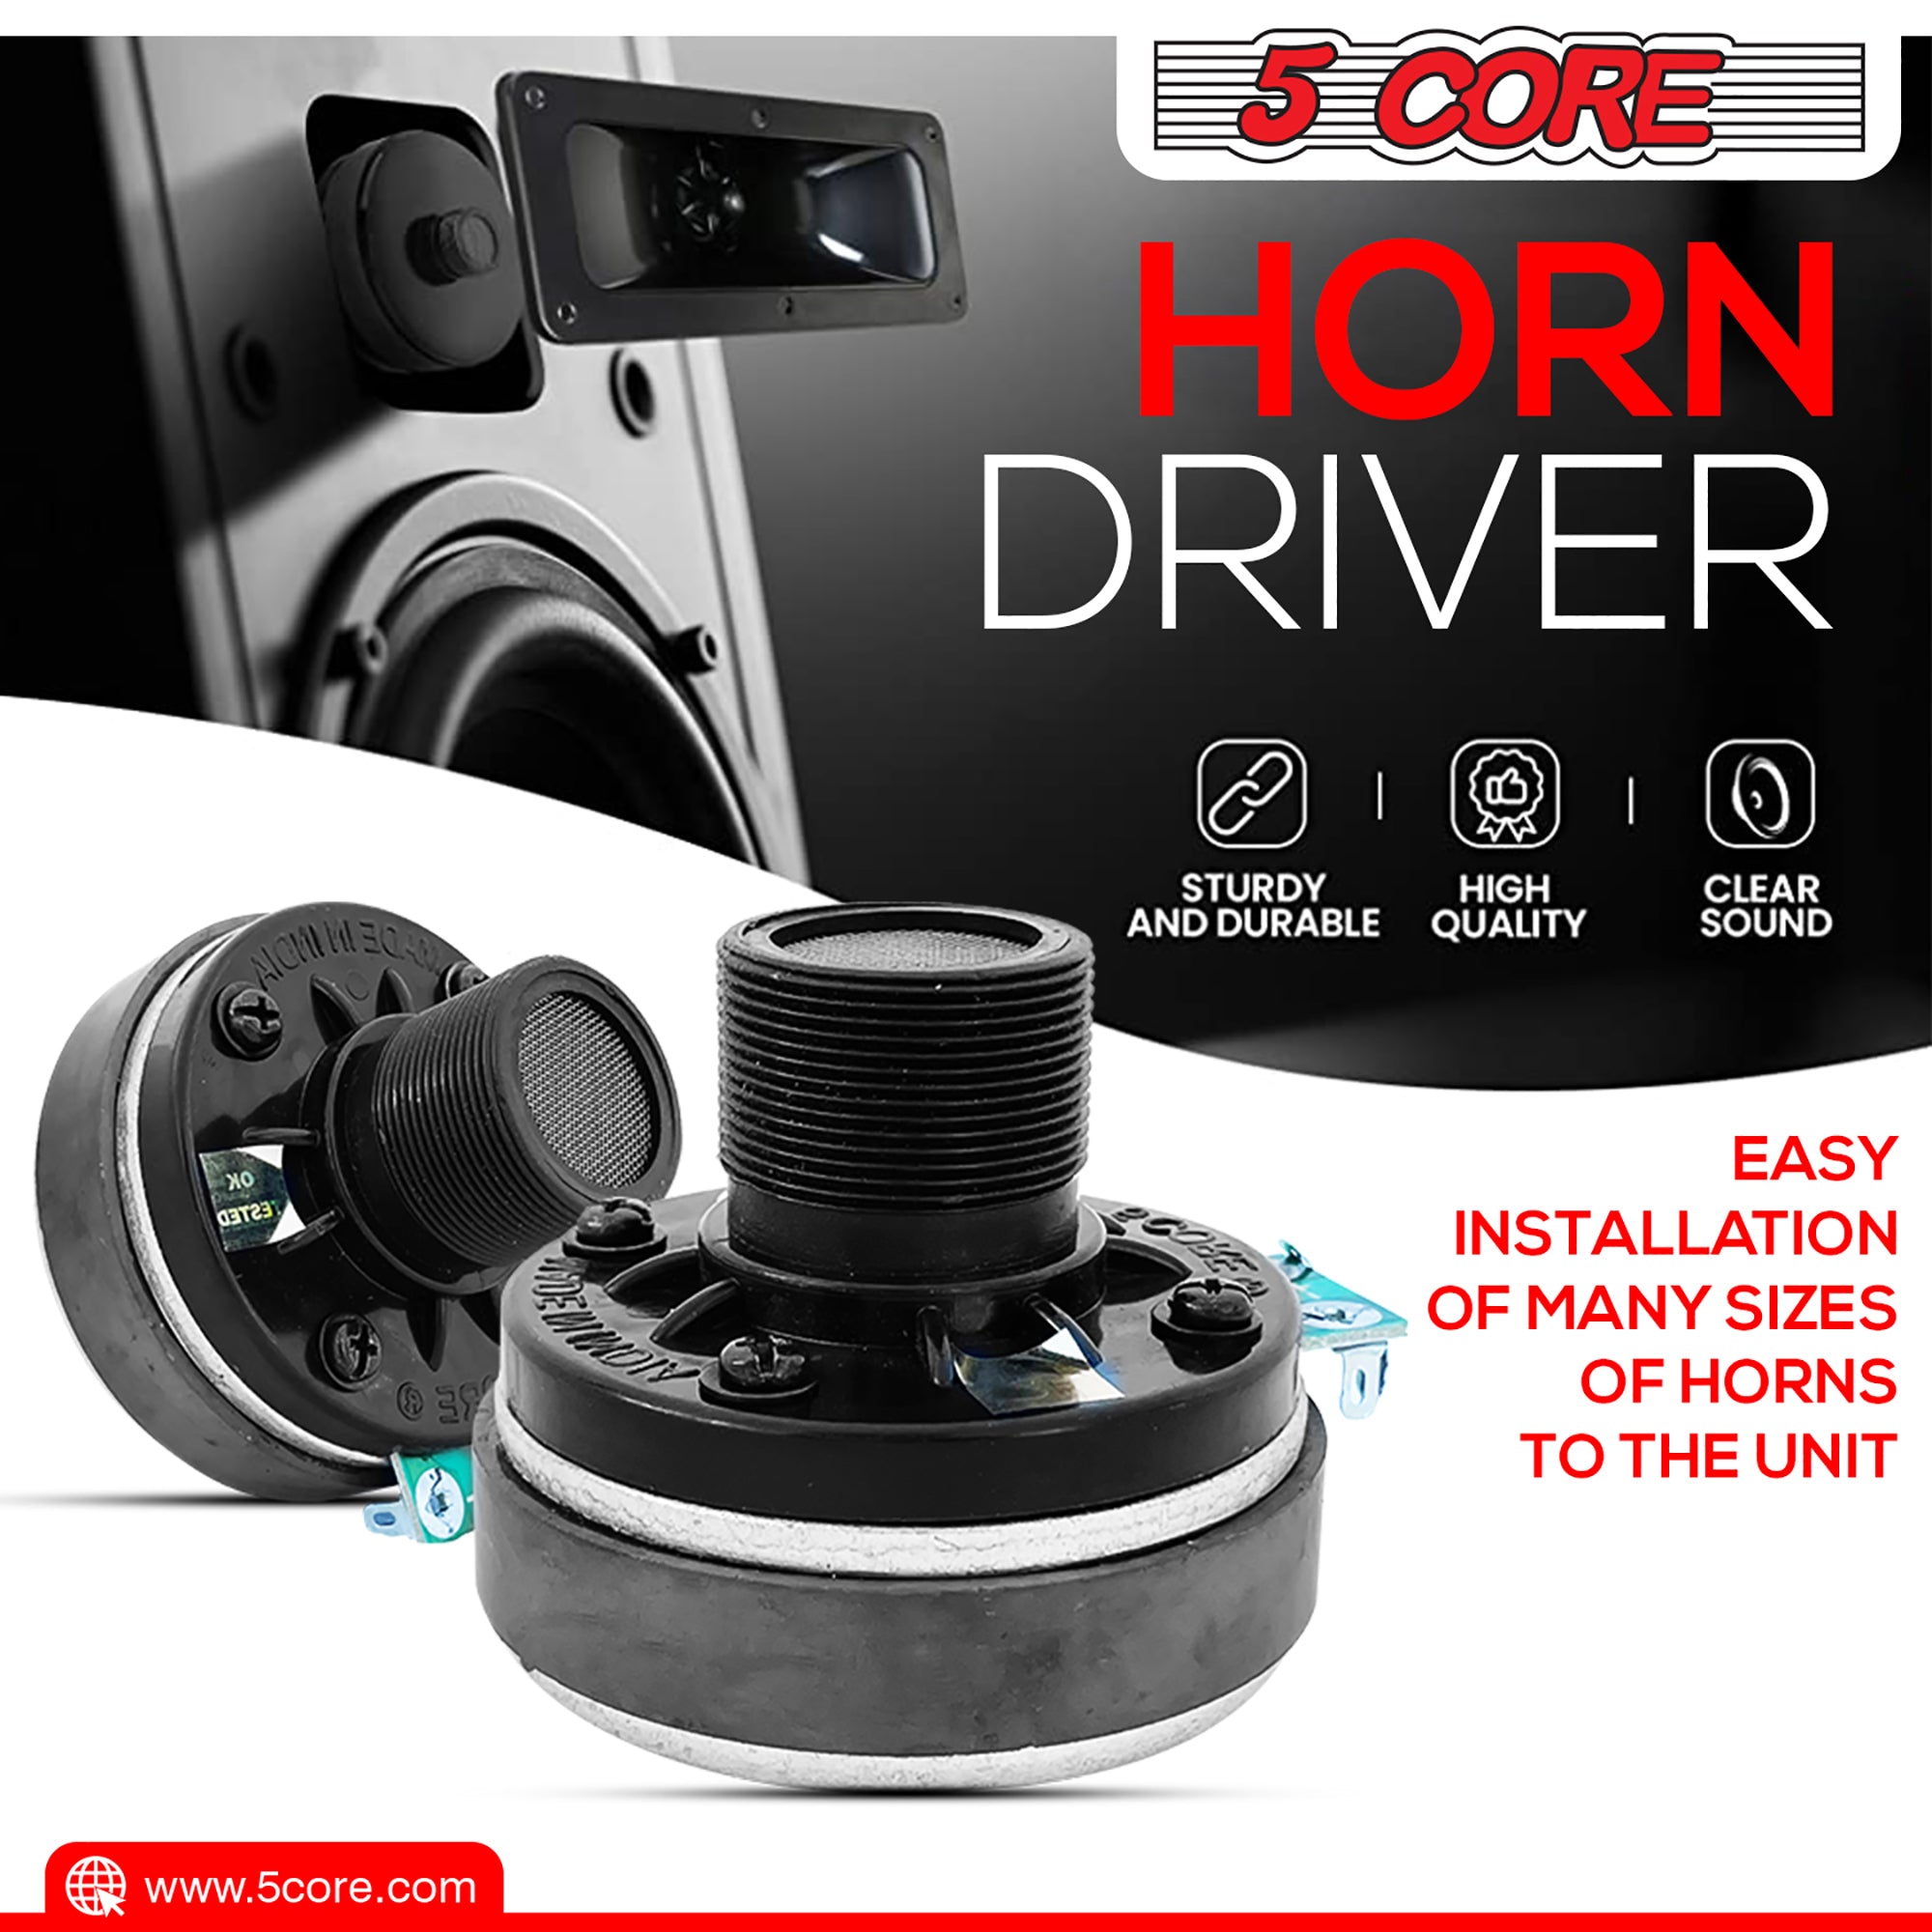 5 Core Horn Speaker Throat Screw On Tweeter Driver Horn 4X10 Inch Rectangle All Weather Directivity Speaker Horn Throat -HISE 4X10 1PC + 5C-D26